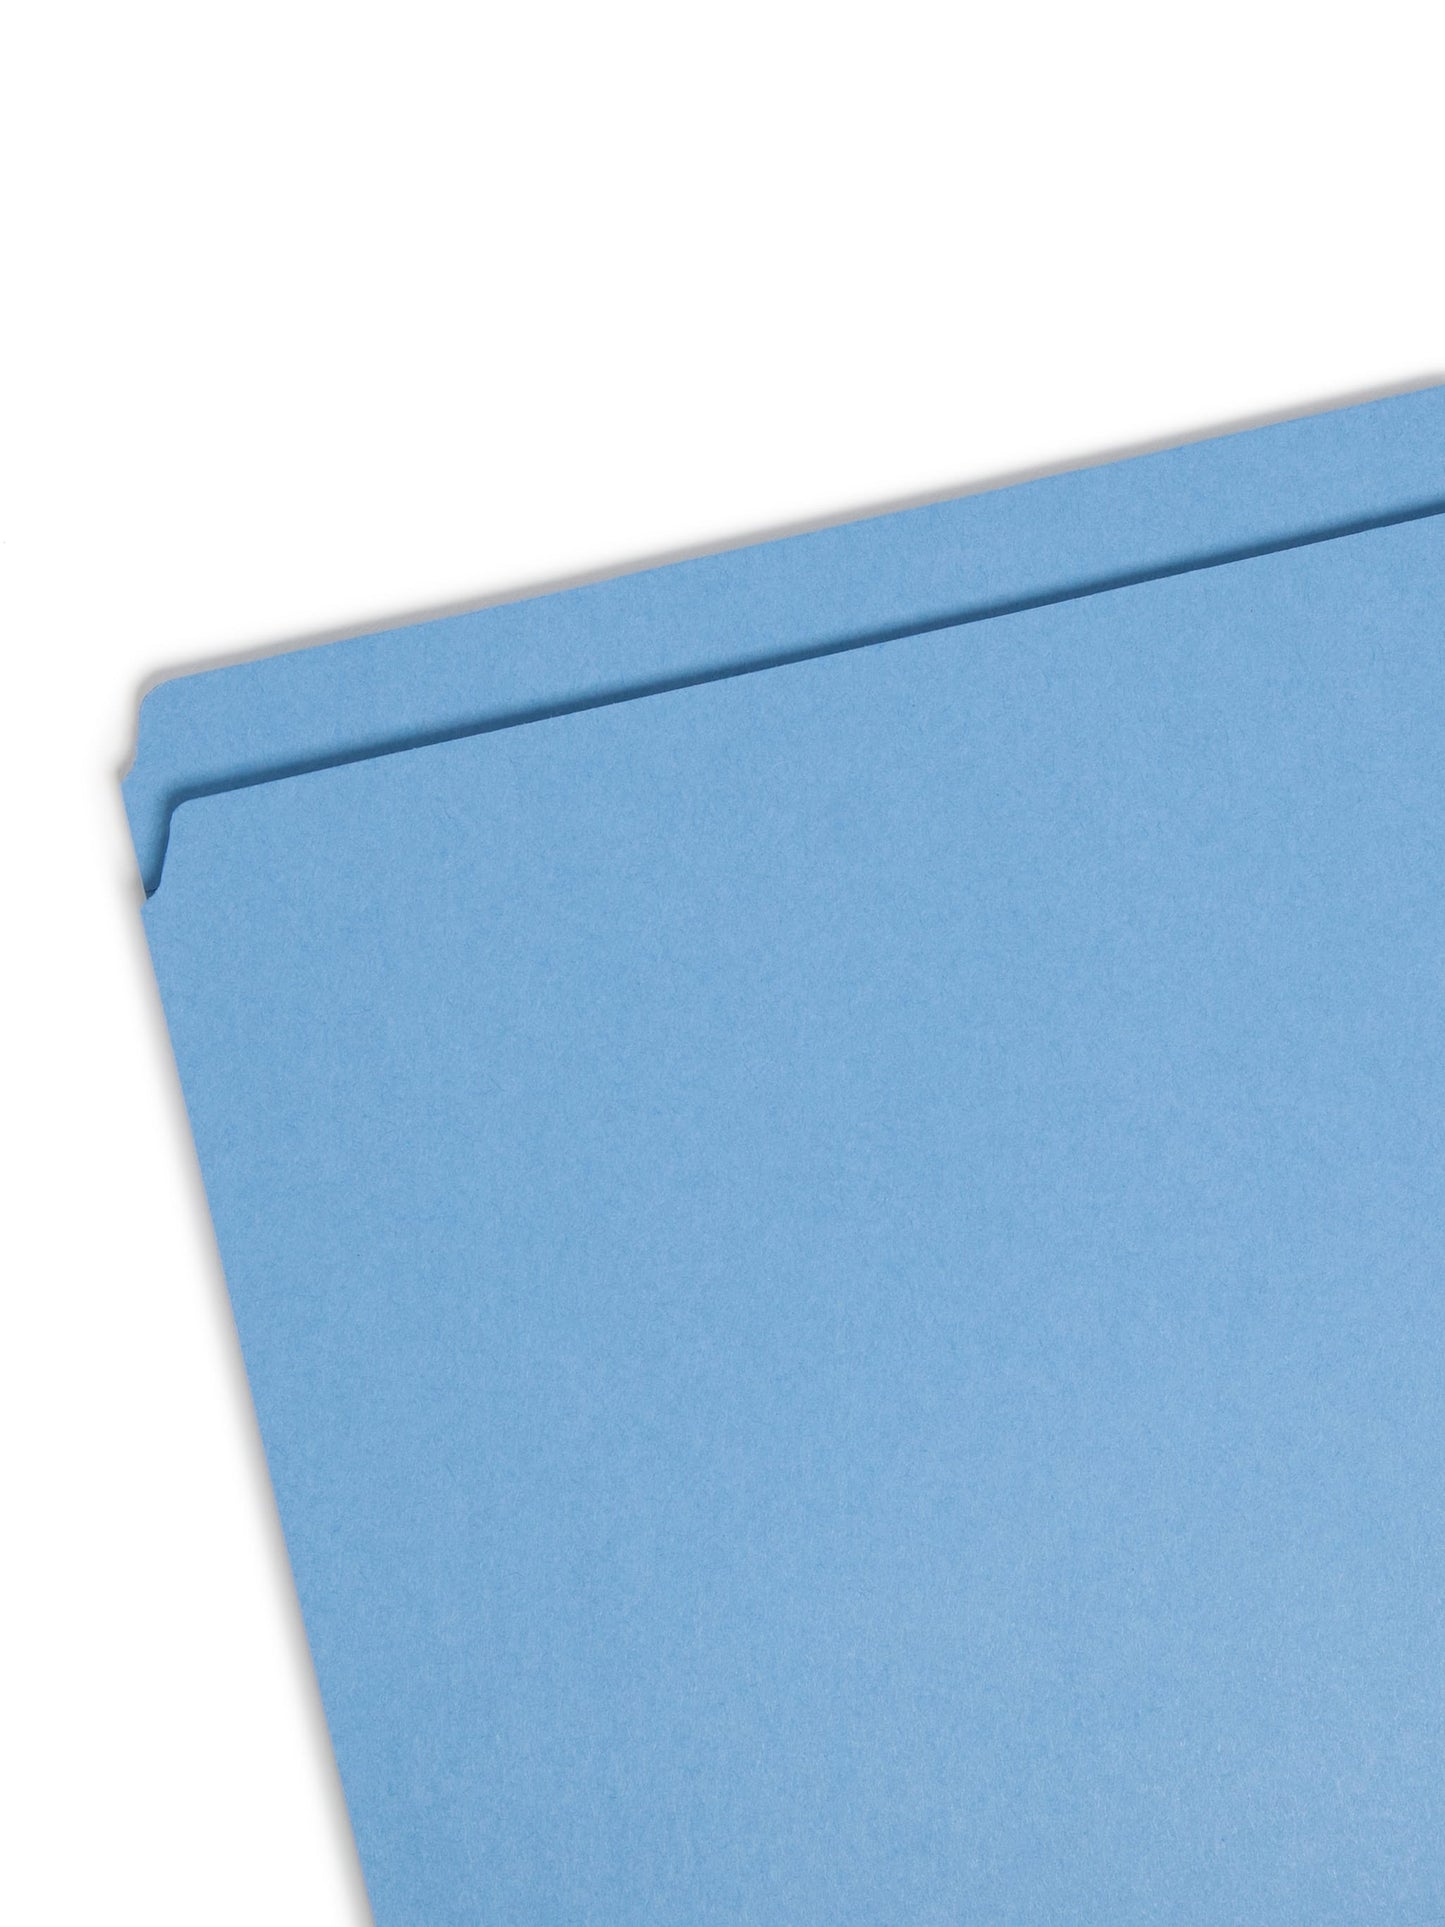 Reinforced Tab File Folders, Straight-Cut Tab, Blue Color, Legal Size, Set of 100, 086486170109